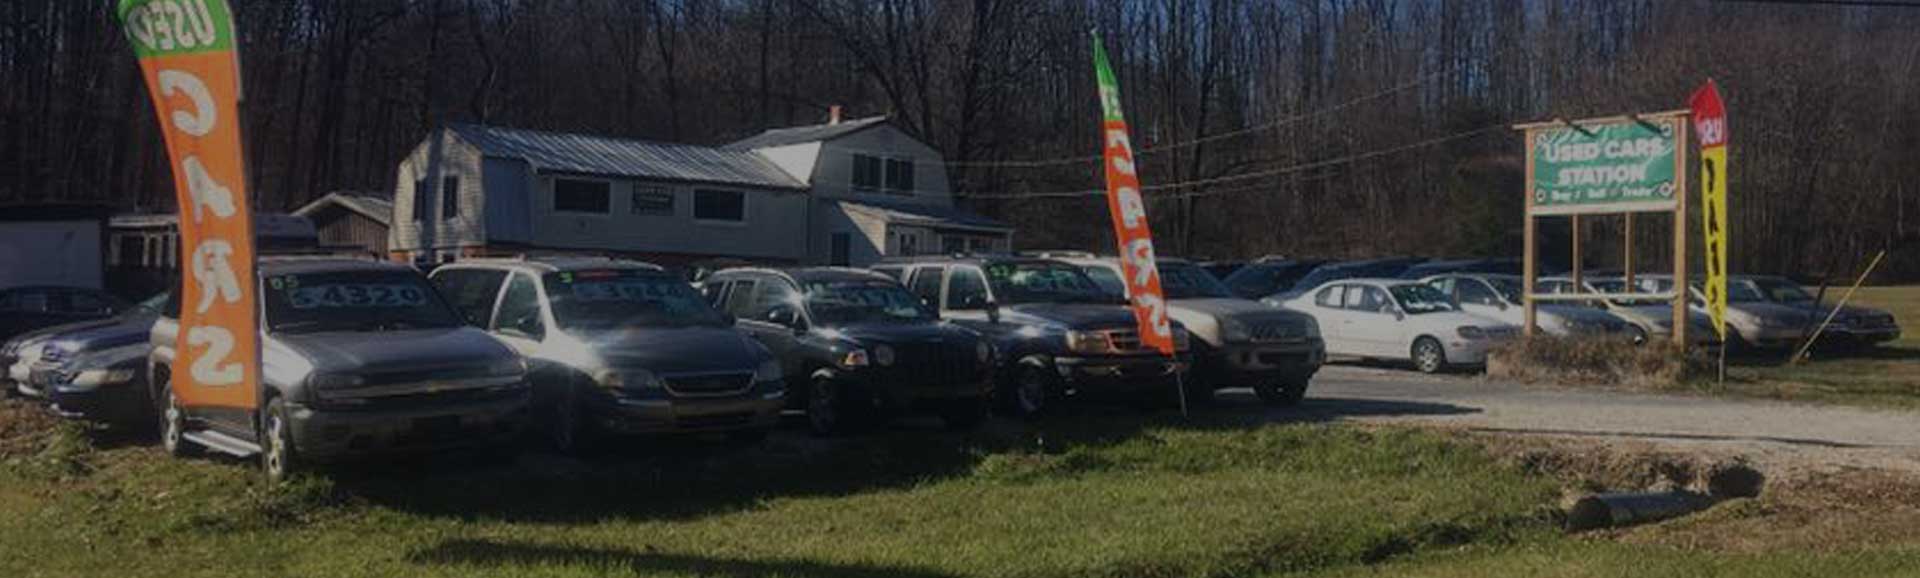 Used Car Station LLC Dealership Lot Image